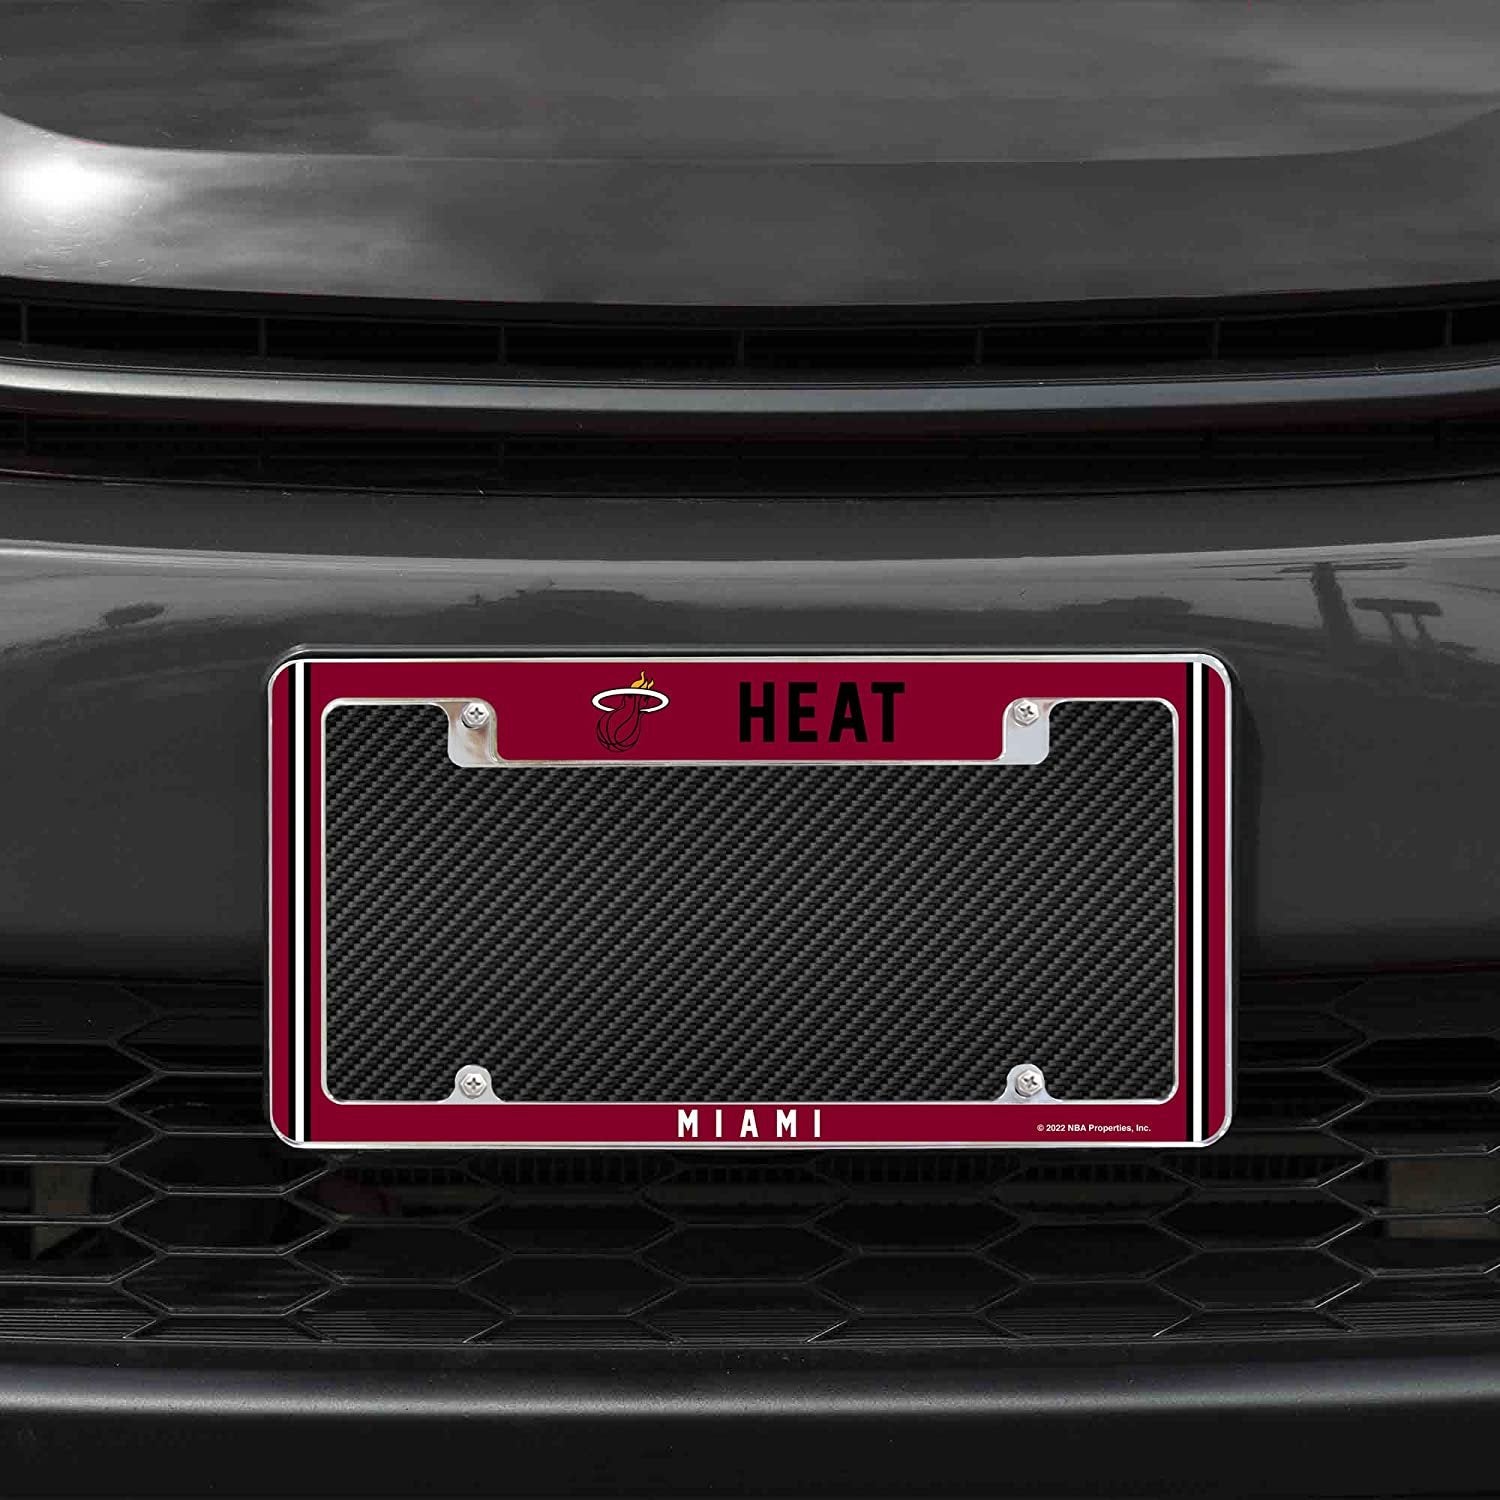 Miami Heat Metal License Plate Frame Chrome Tag Cover Alternate Design 6x12 Inch